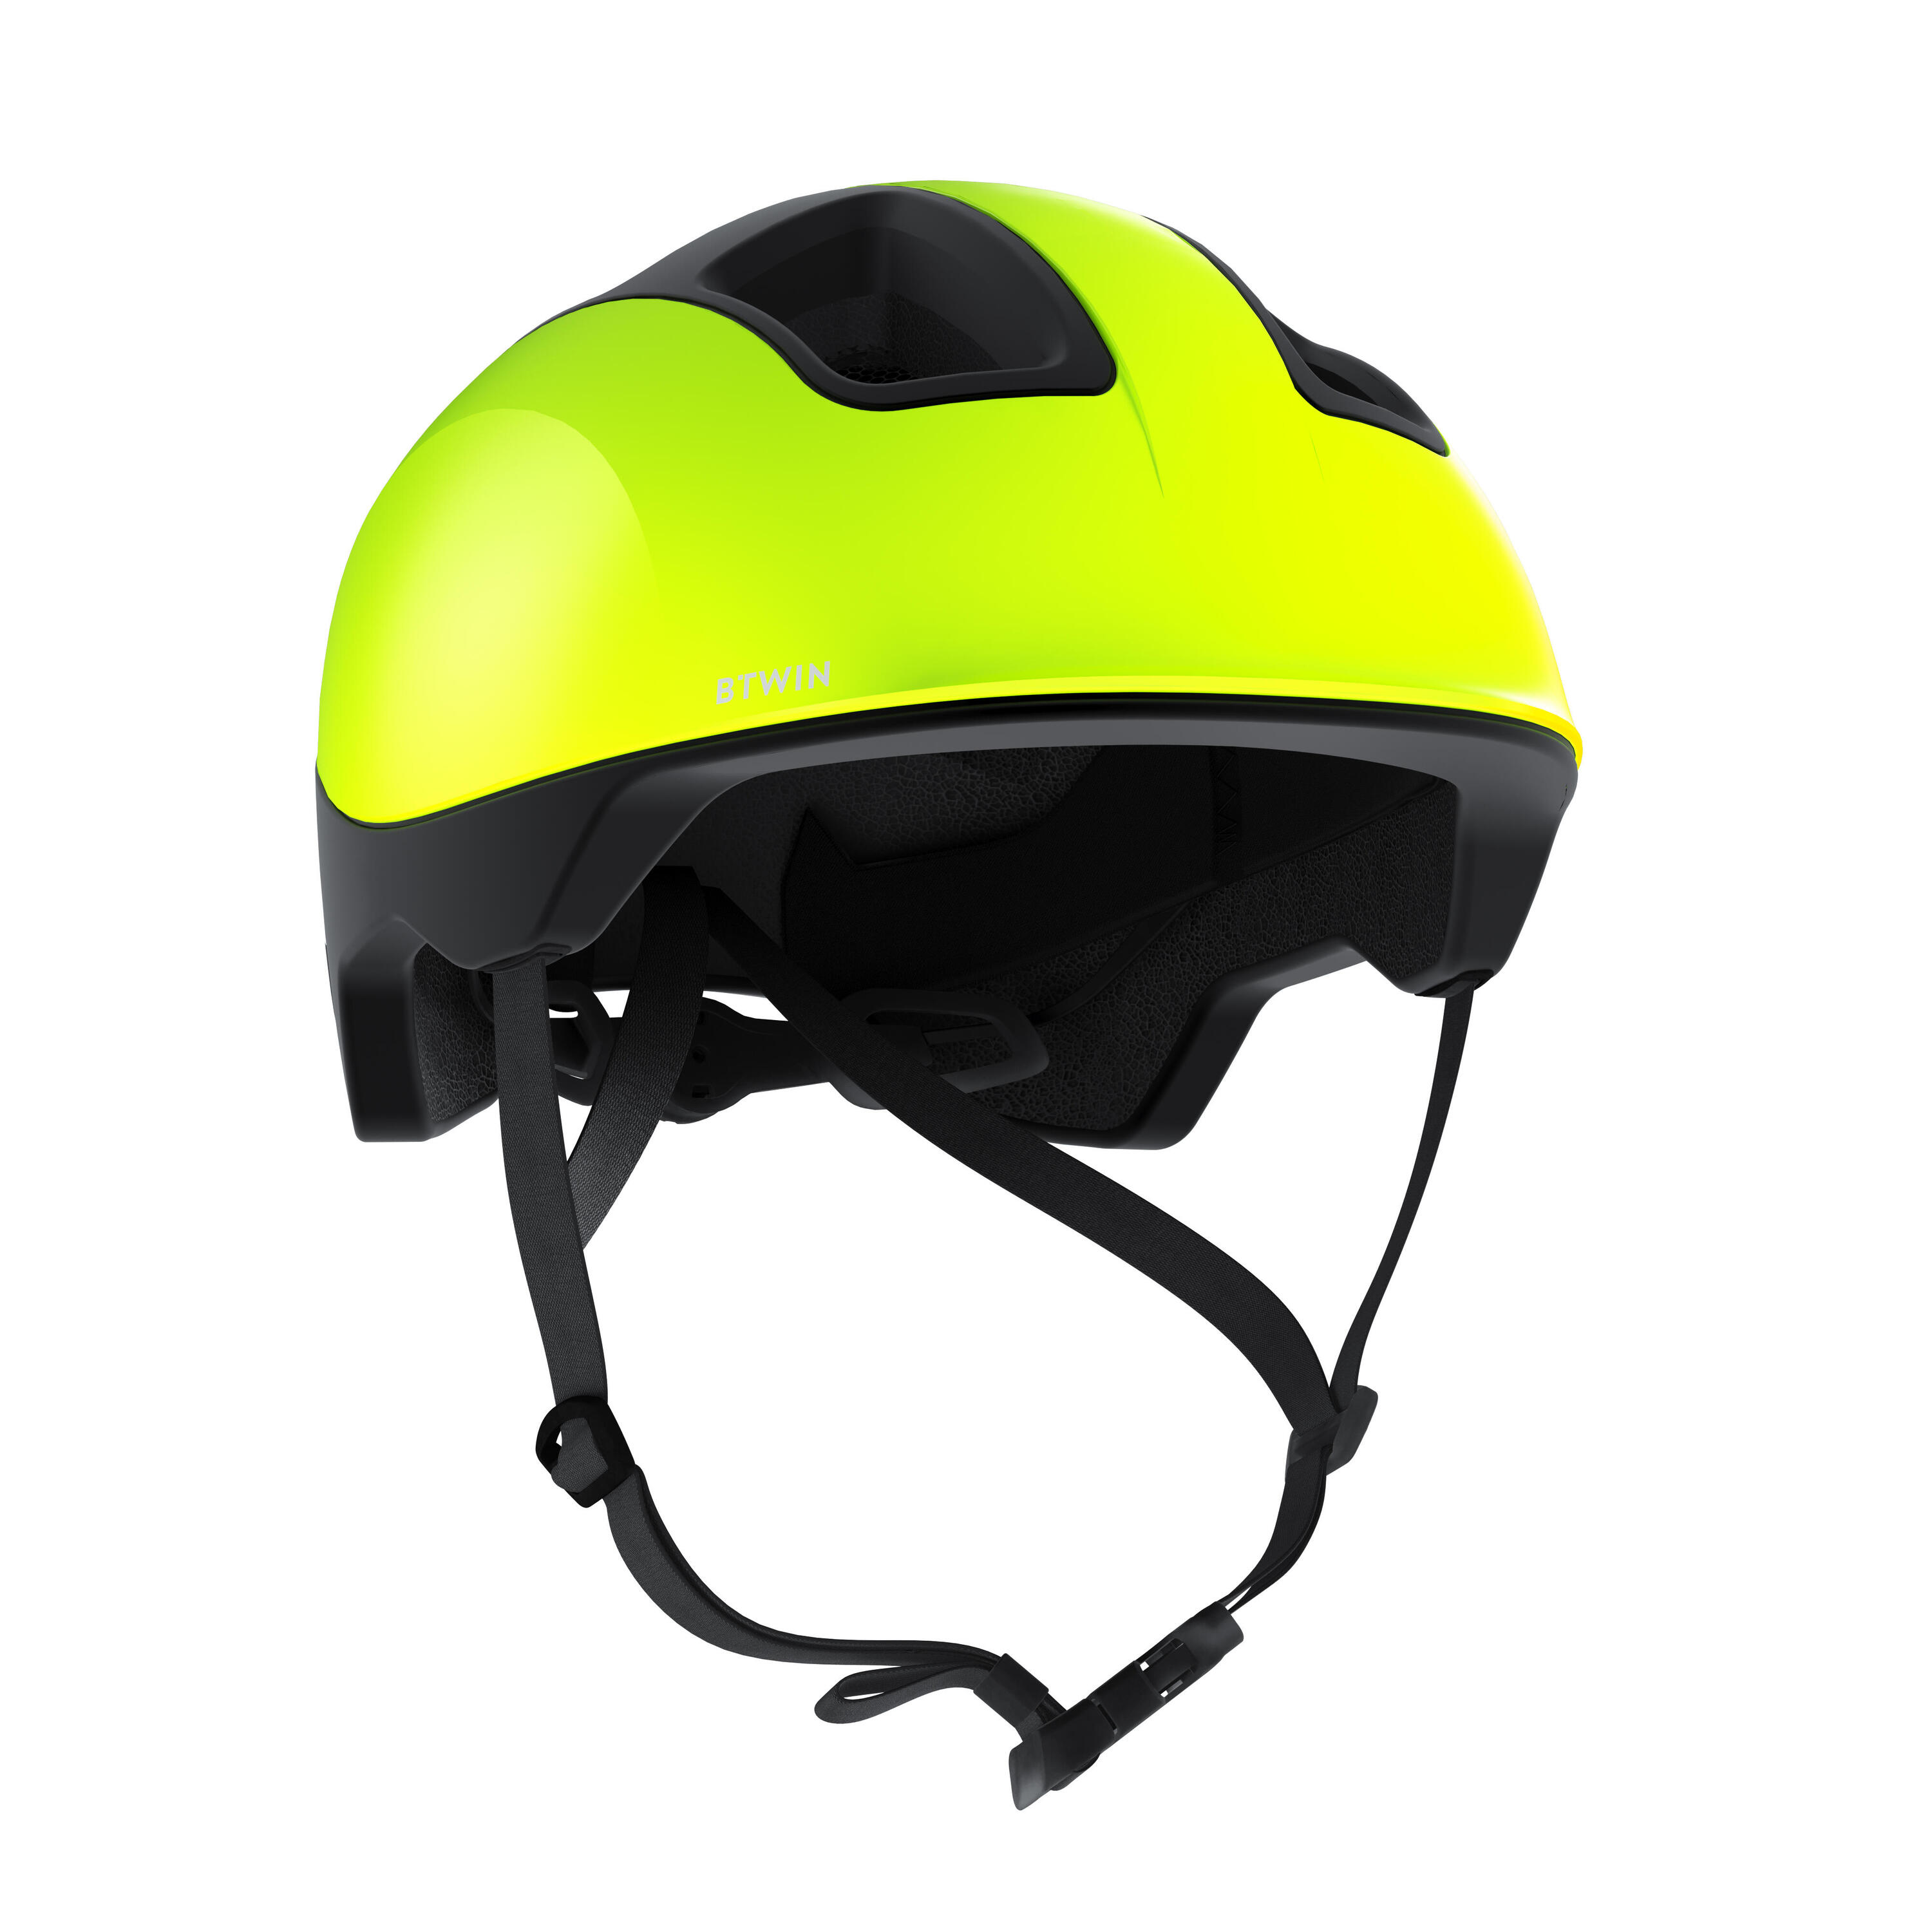 BTWIN 540 City Cycling Helmet Yellow